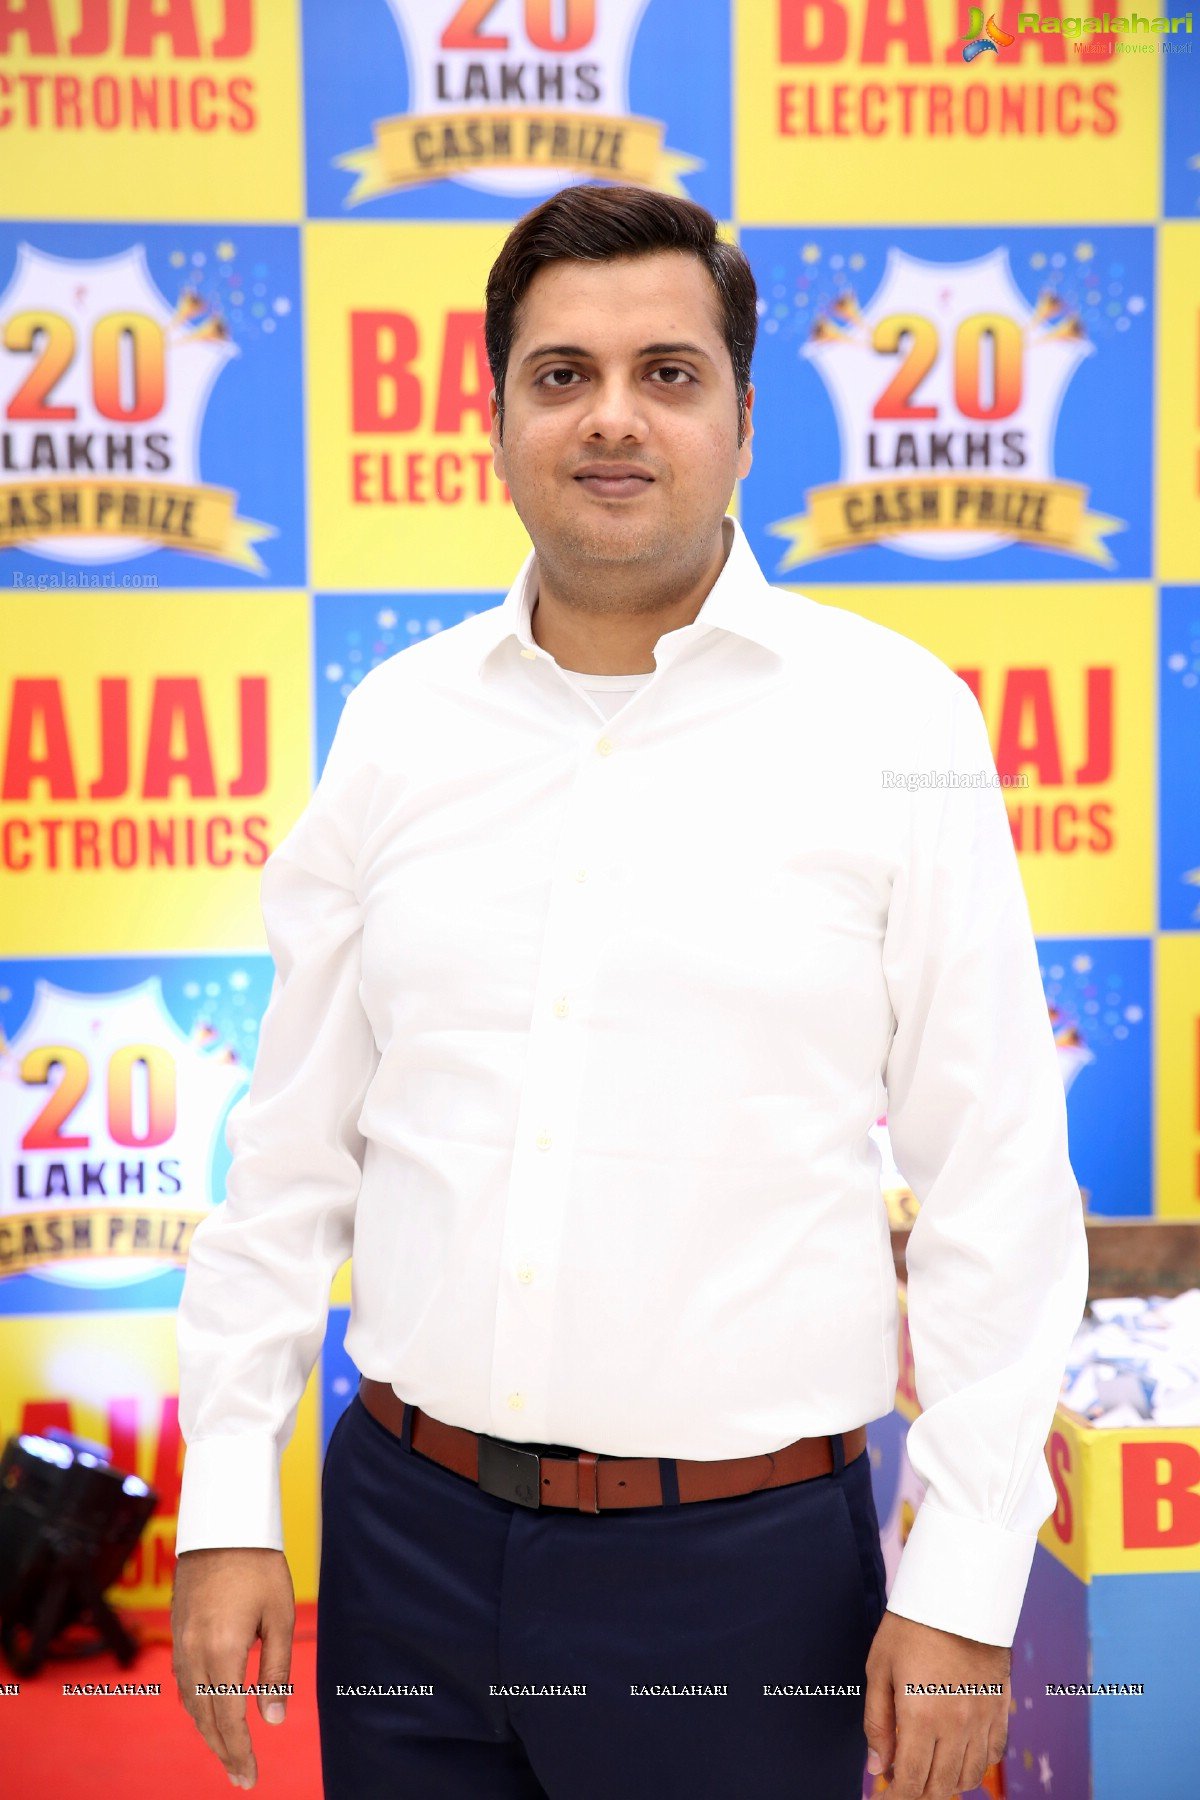 Archana Shastry Announces Bajaj Electronics Grand Lucky Draw Winner